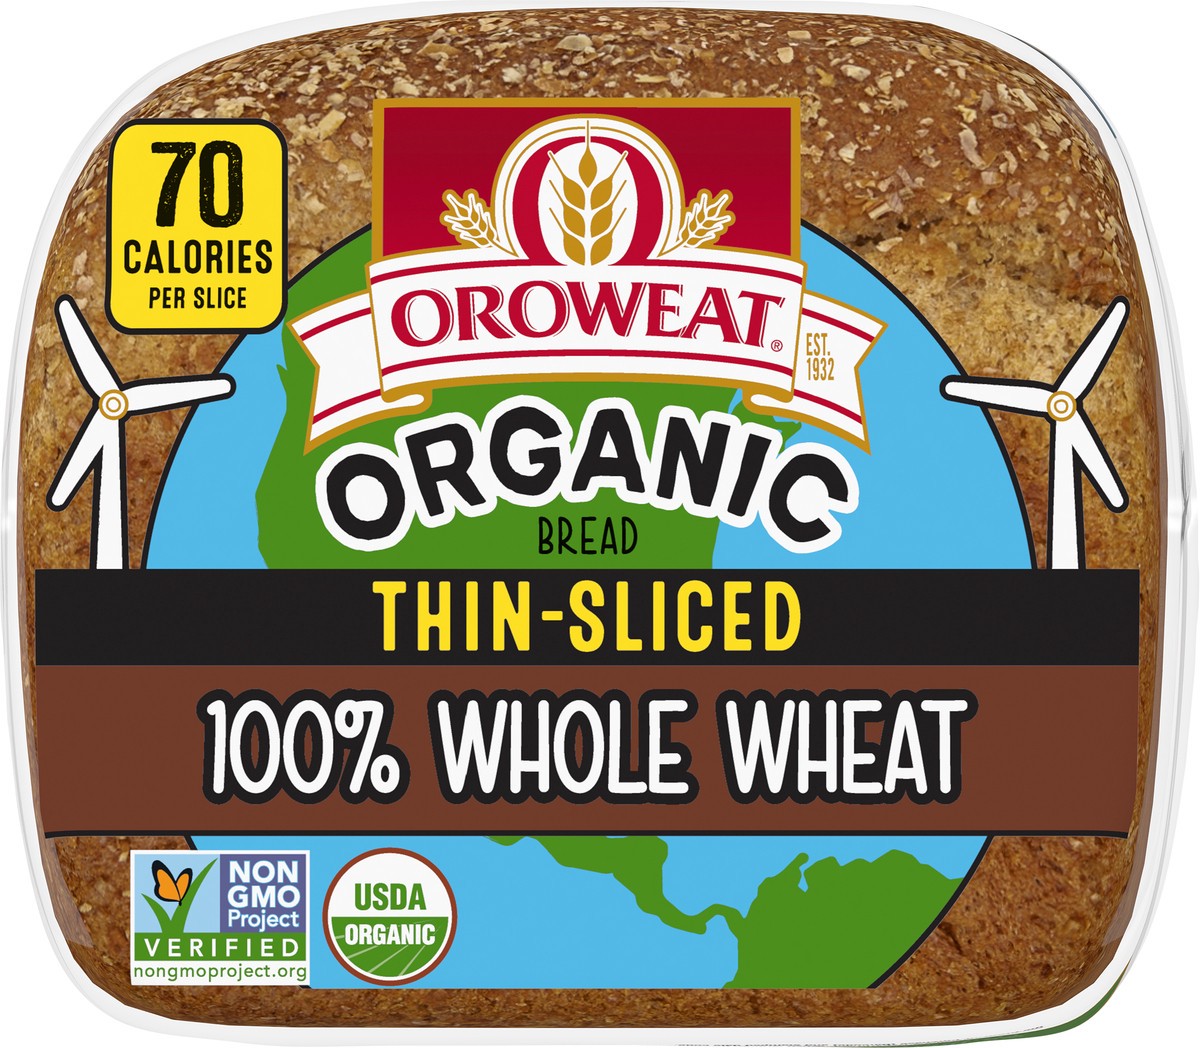 slide 4 of 7, Oroweat Organic 100% Whole Wheat Thin-Sliced Bread, 20 oz, 1 cnt